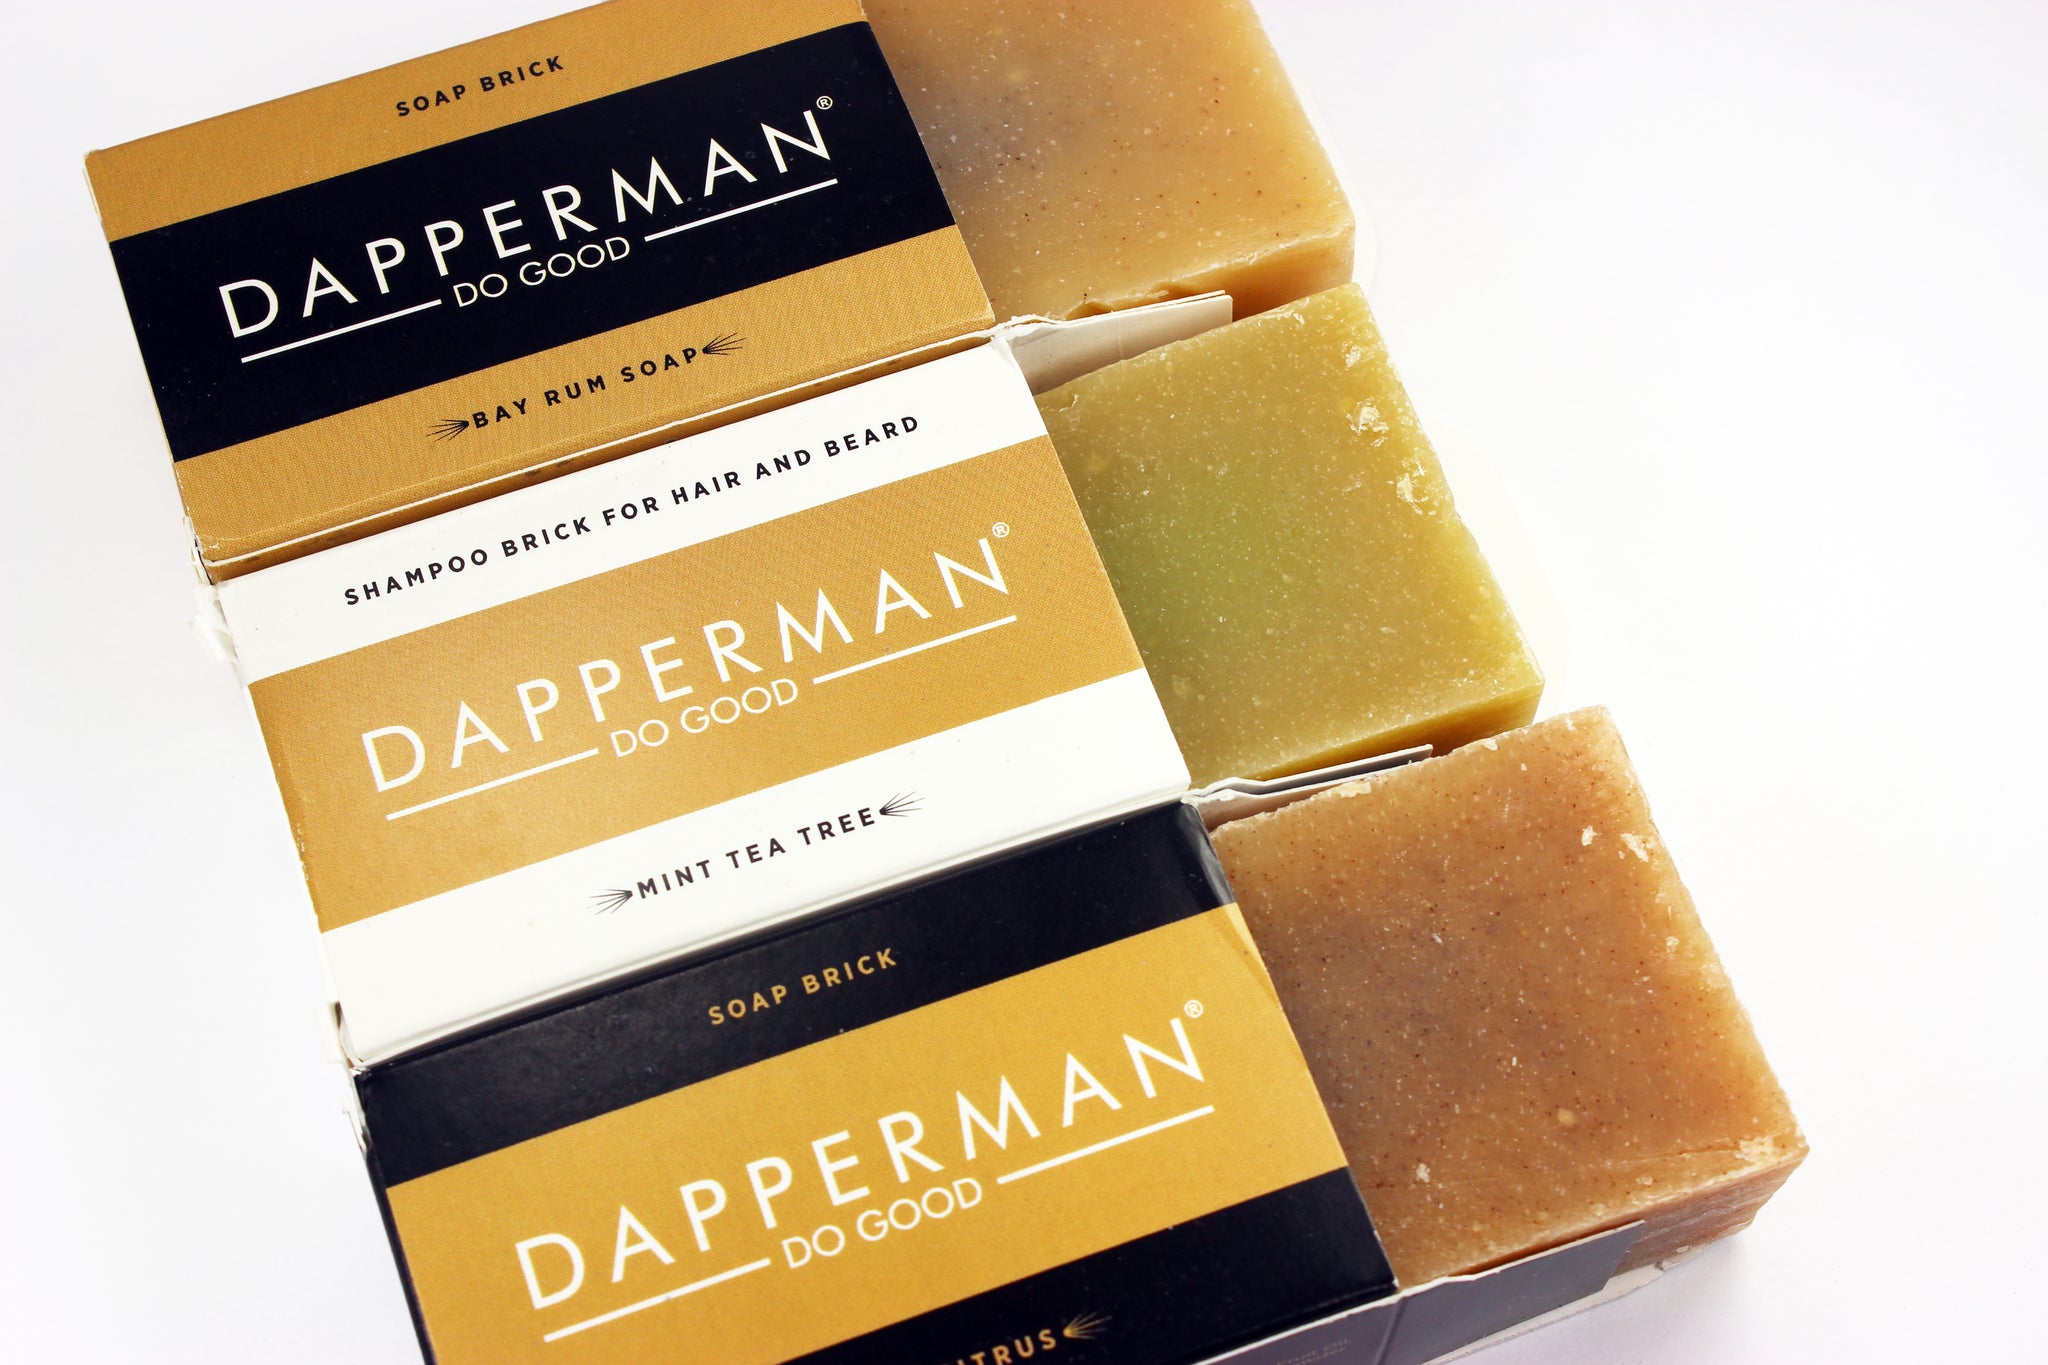 Dapperman Brand Soaps